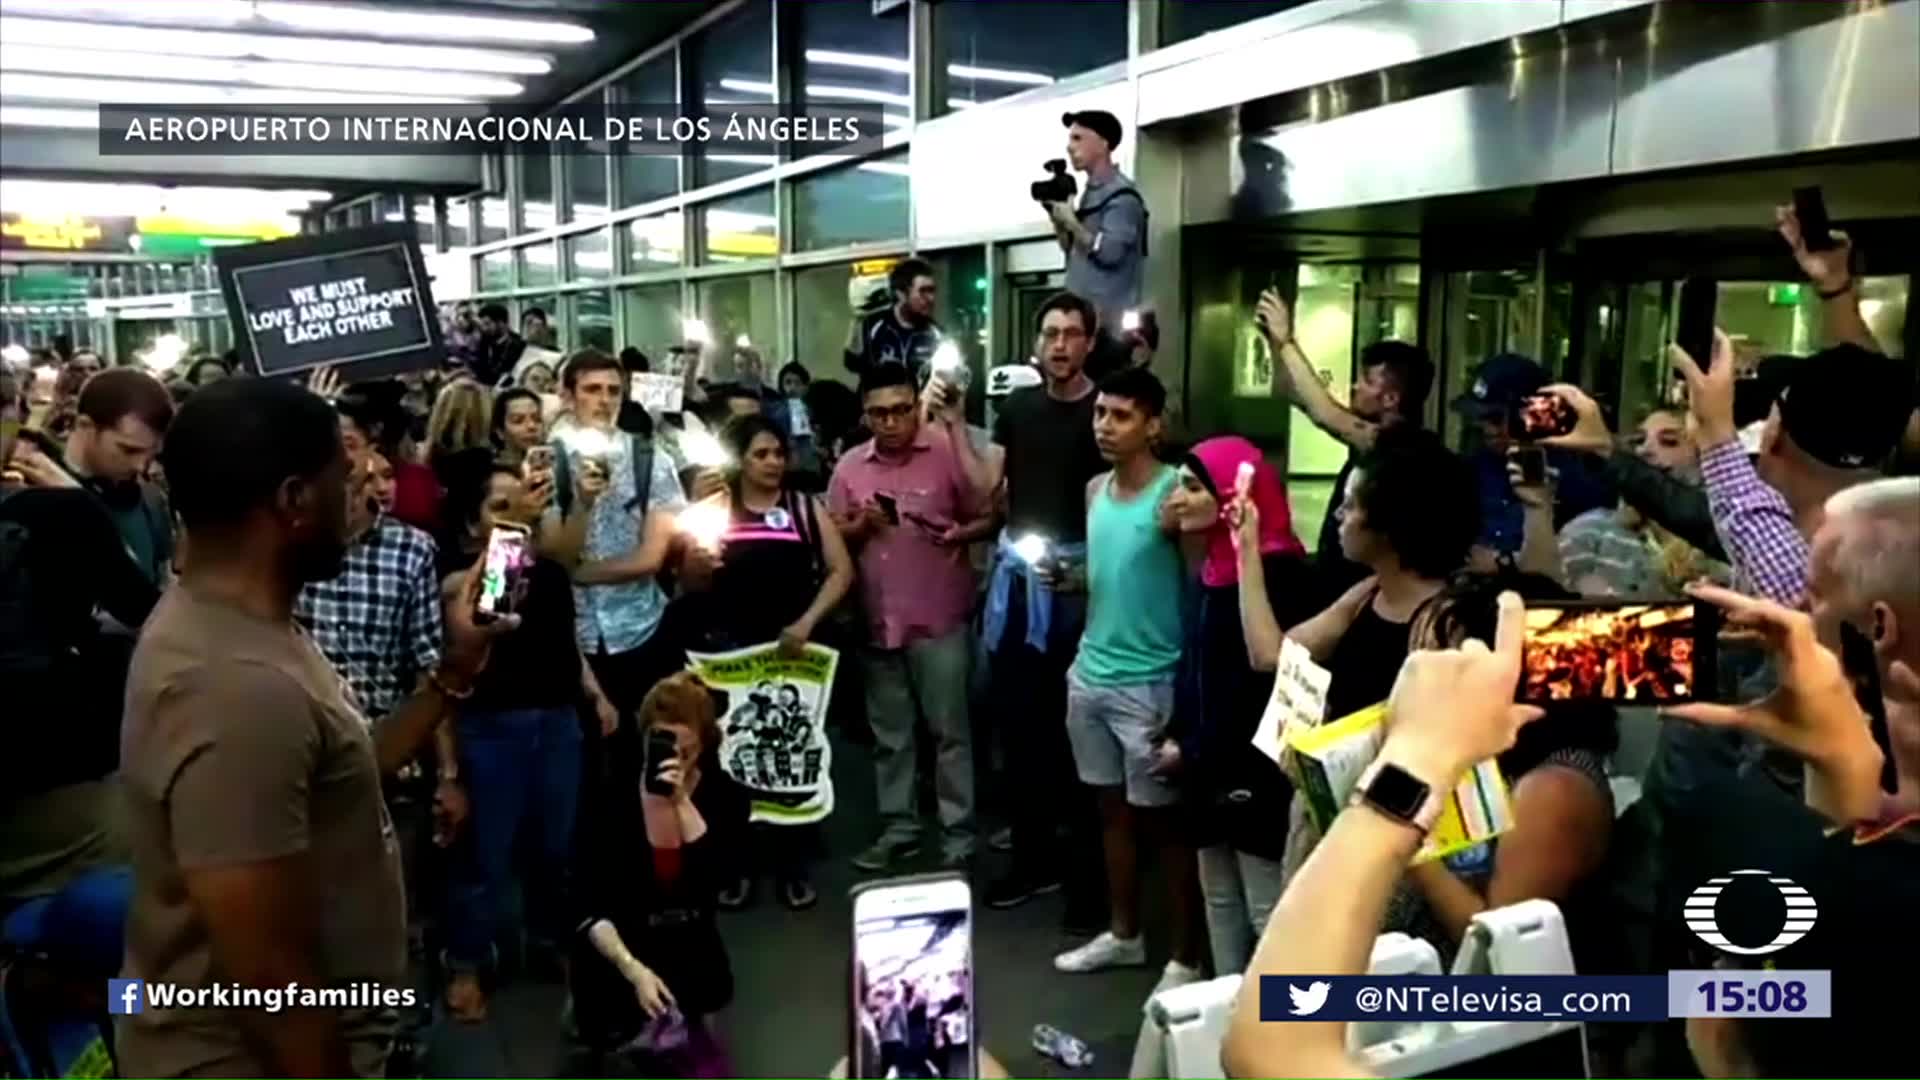 Protestan Aeropuertos EU Contra Separación Familias